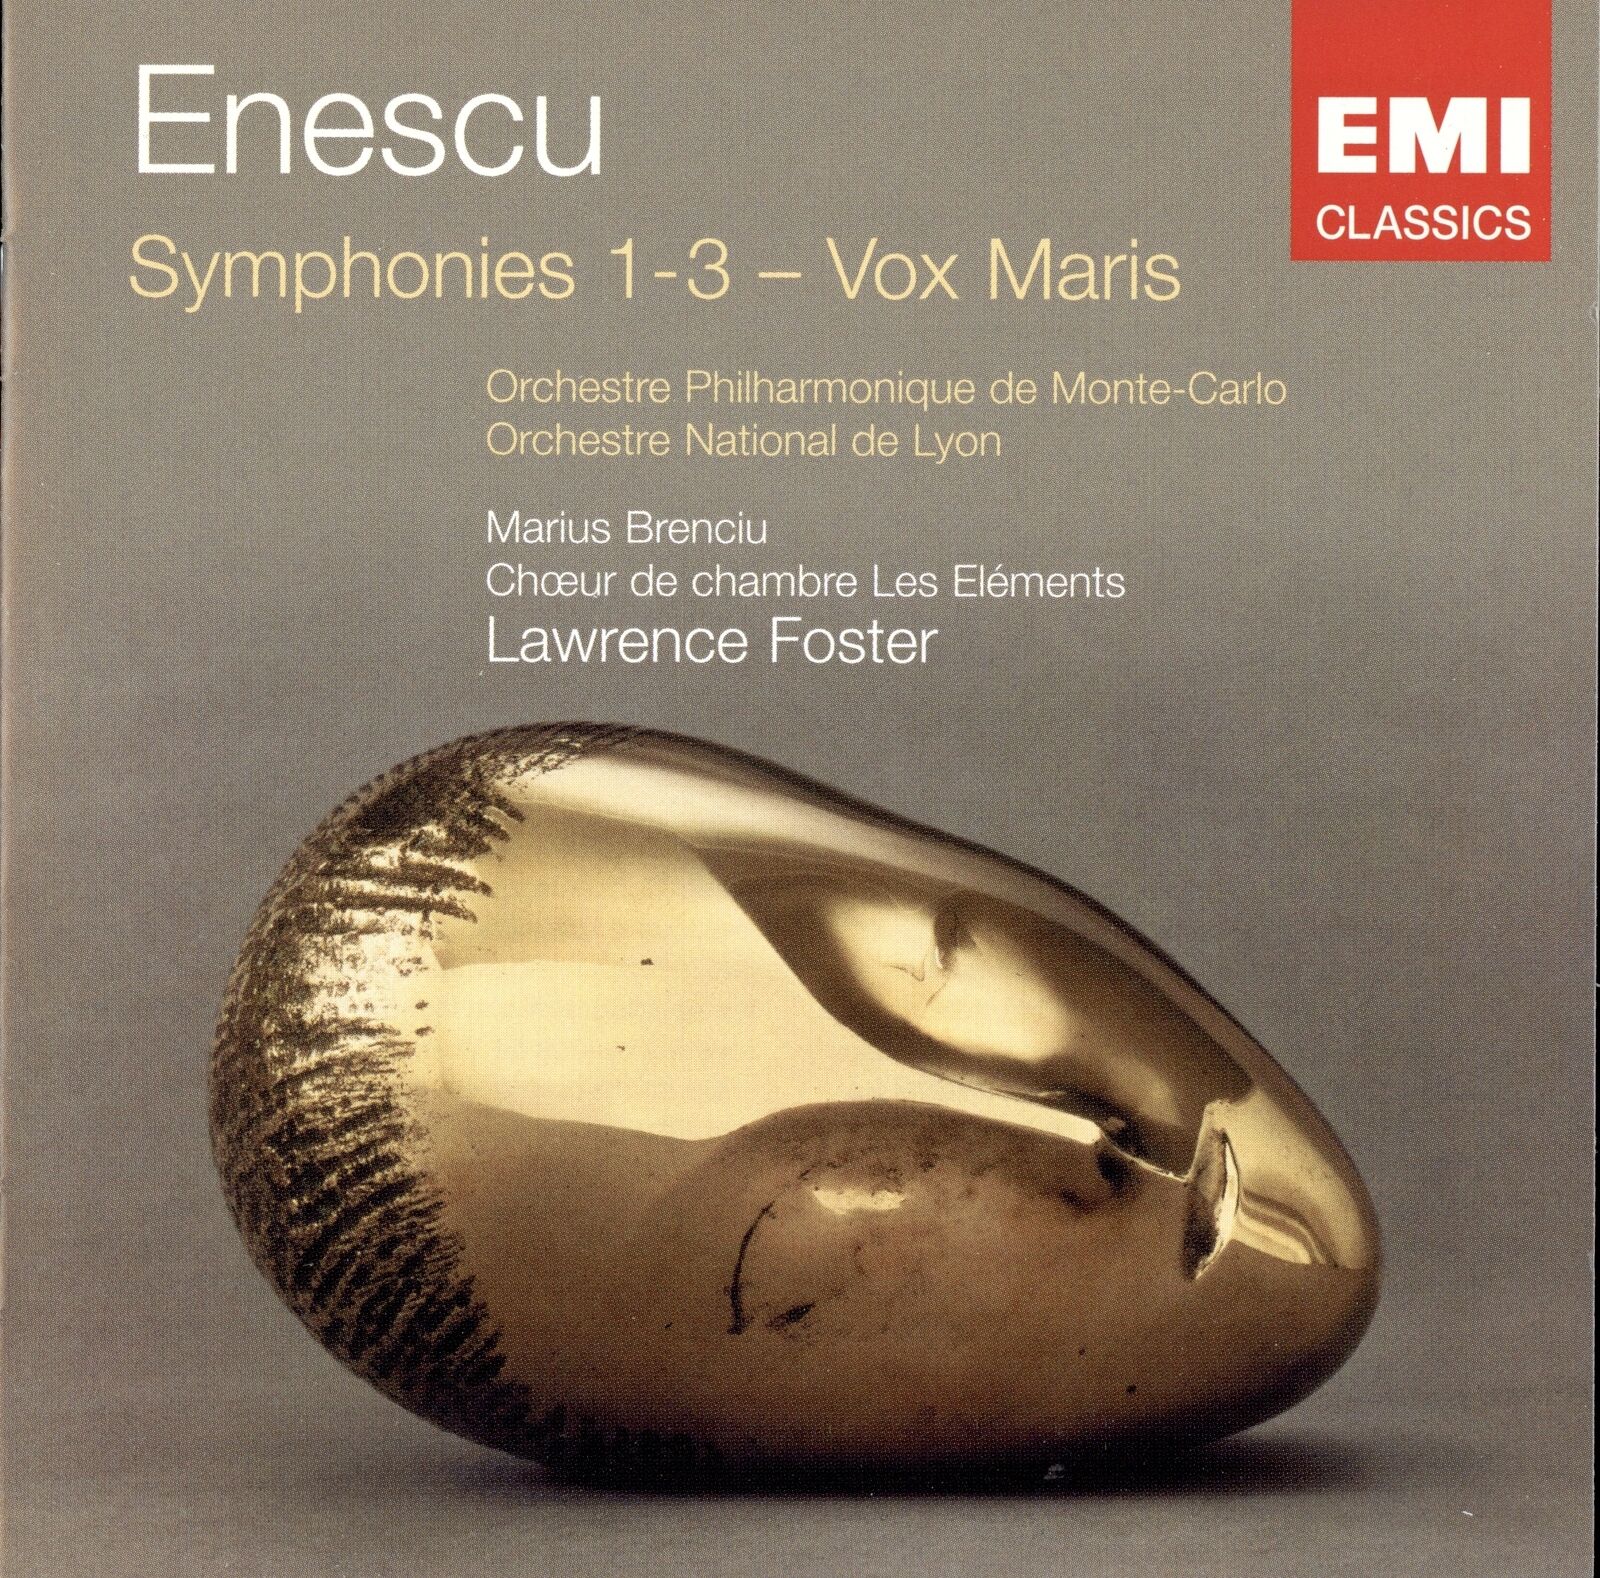 ENESCU: Symphonies 1-3 / Vox Maris; Lawrence Foster (CD, 2005, 2 Discs, EMI)